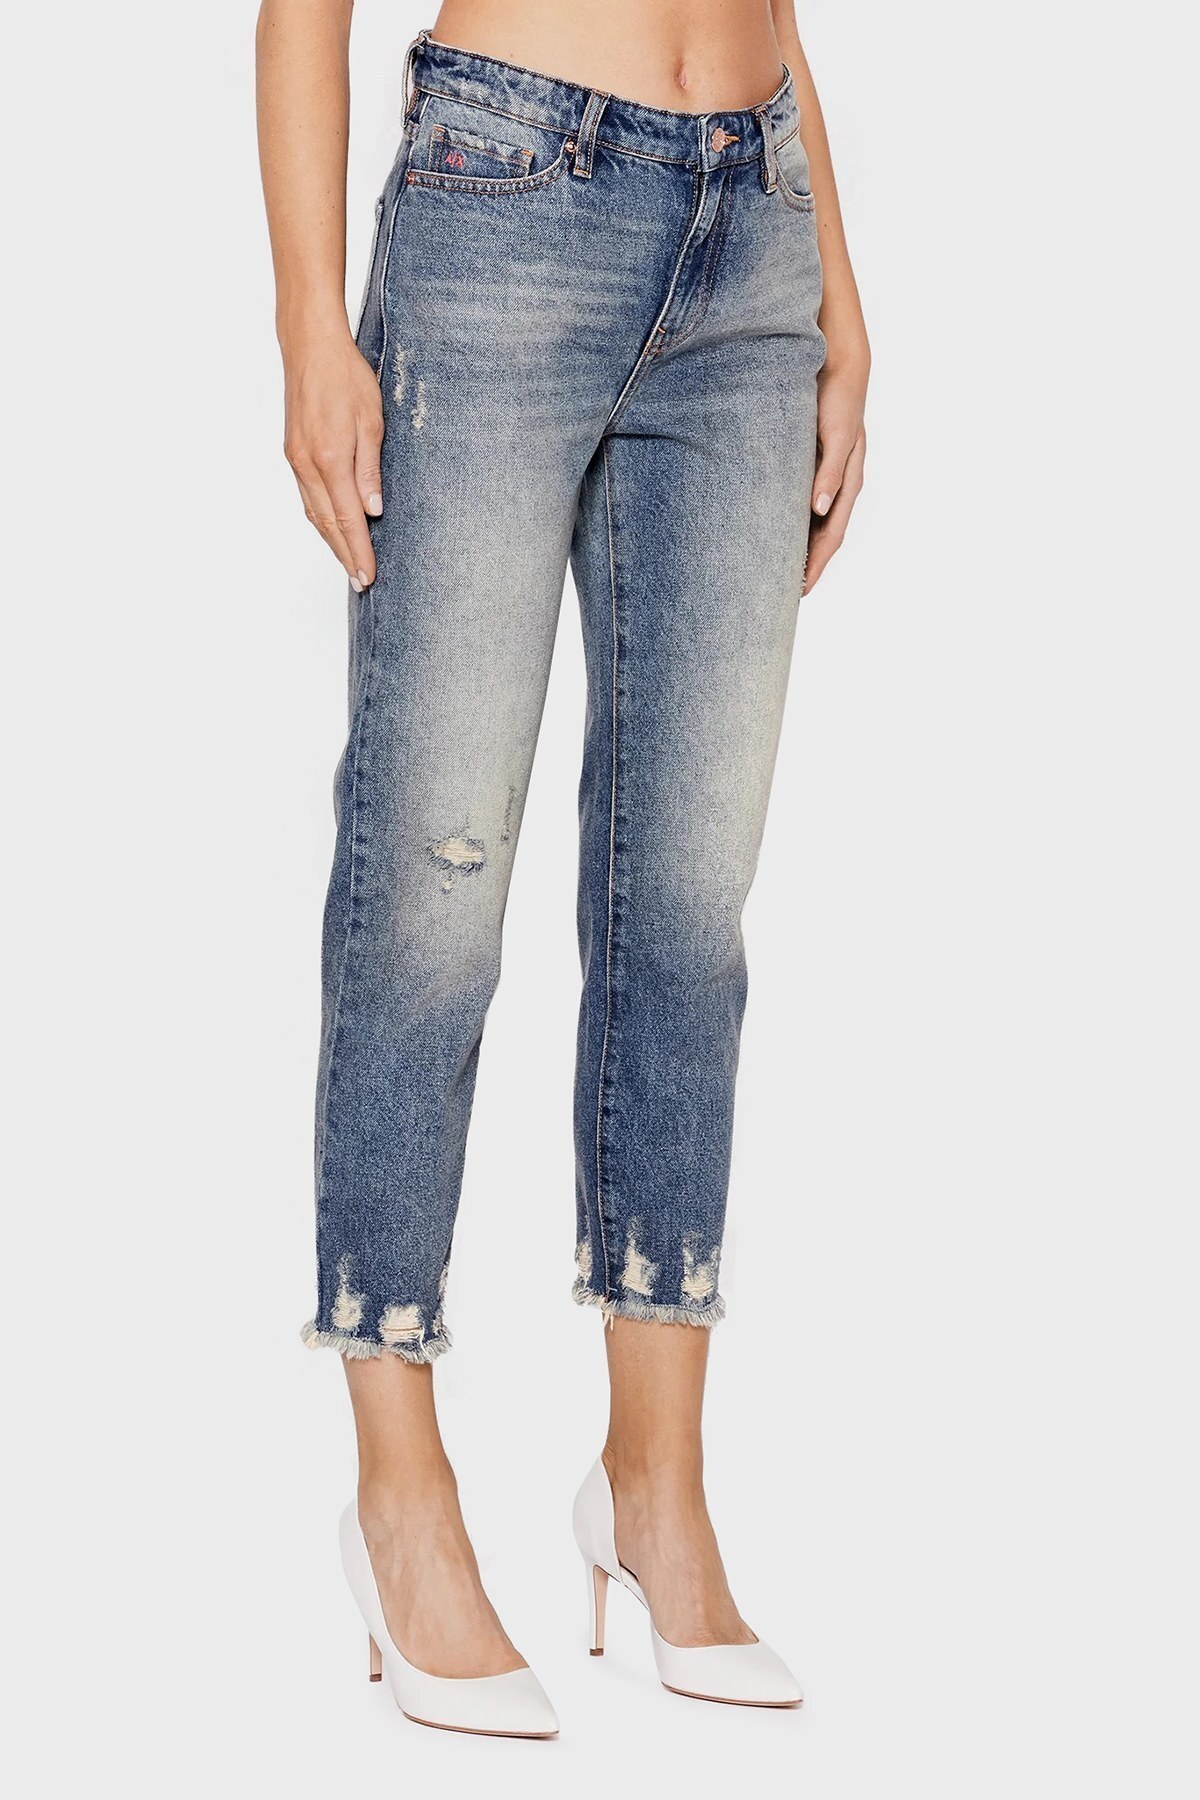 Armani Exchange Pamuklu Yırtık Detaylı Yüksek Bel Boyfriend Jeans Bayan Kot Pantolon 3LYJ16 Y1SHZ 1500 İNDİGO